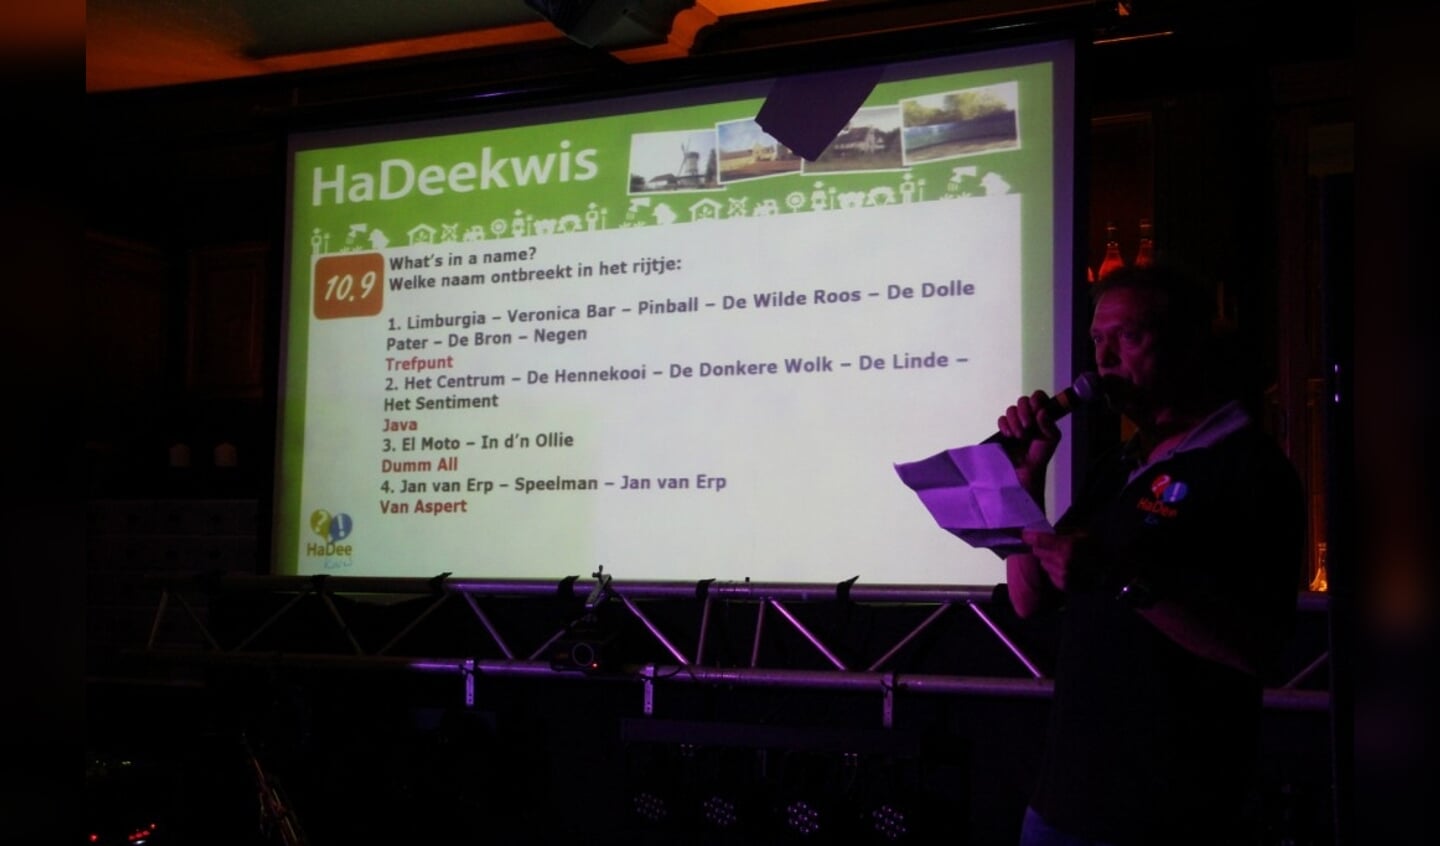 Heeswijk-Dinther - Uitslag HaDee kwis